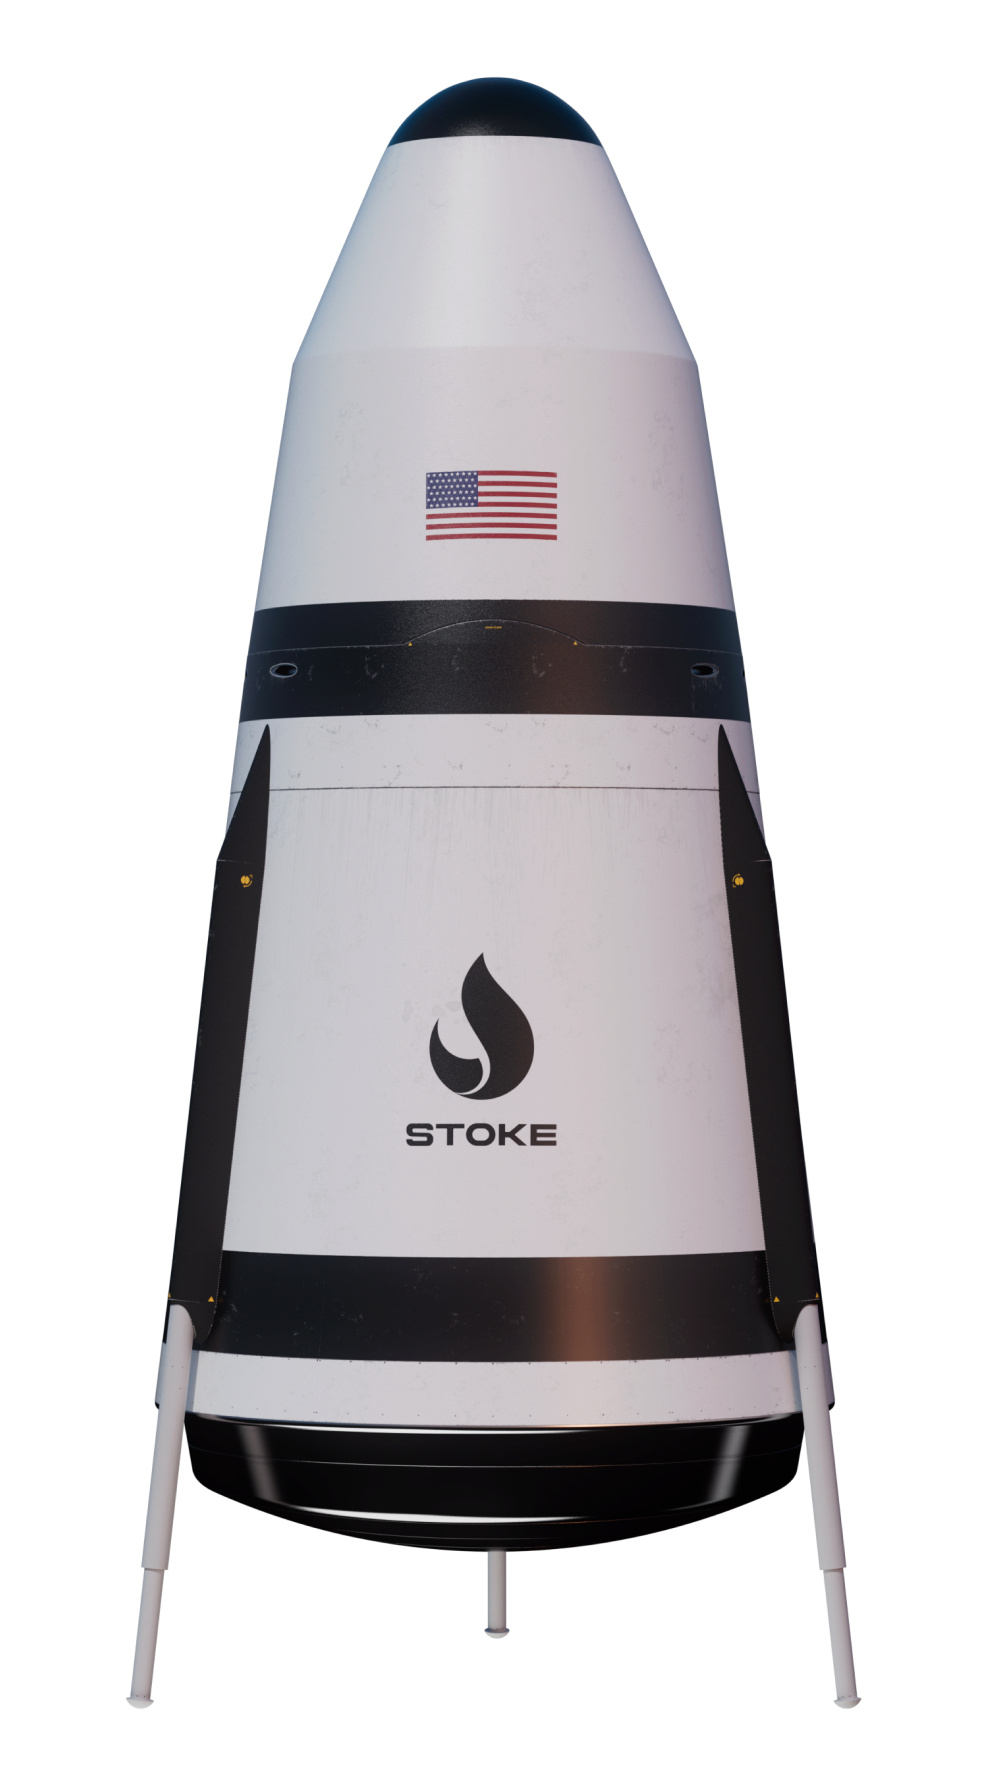 [USA] Stoke Space Technologies Rocket11